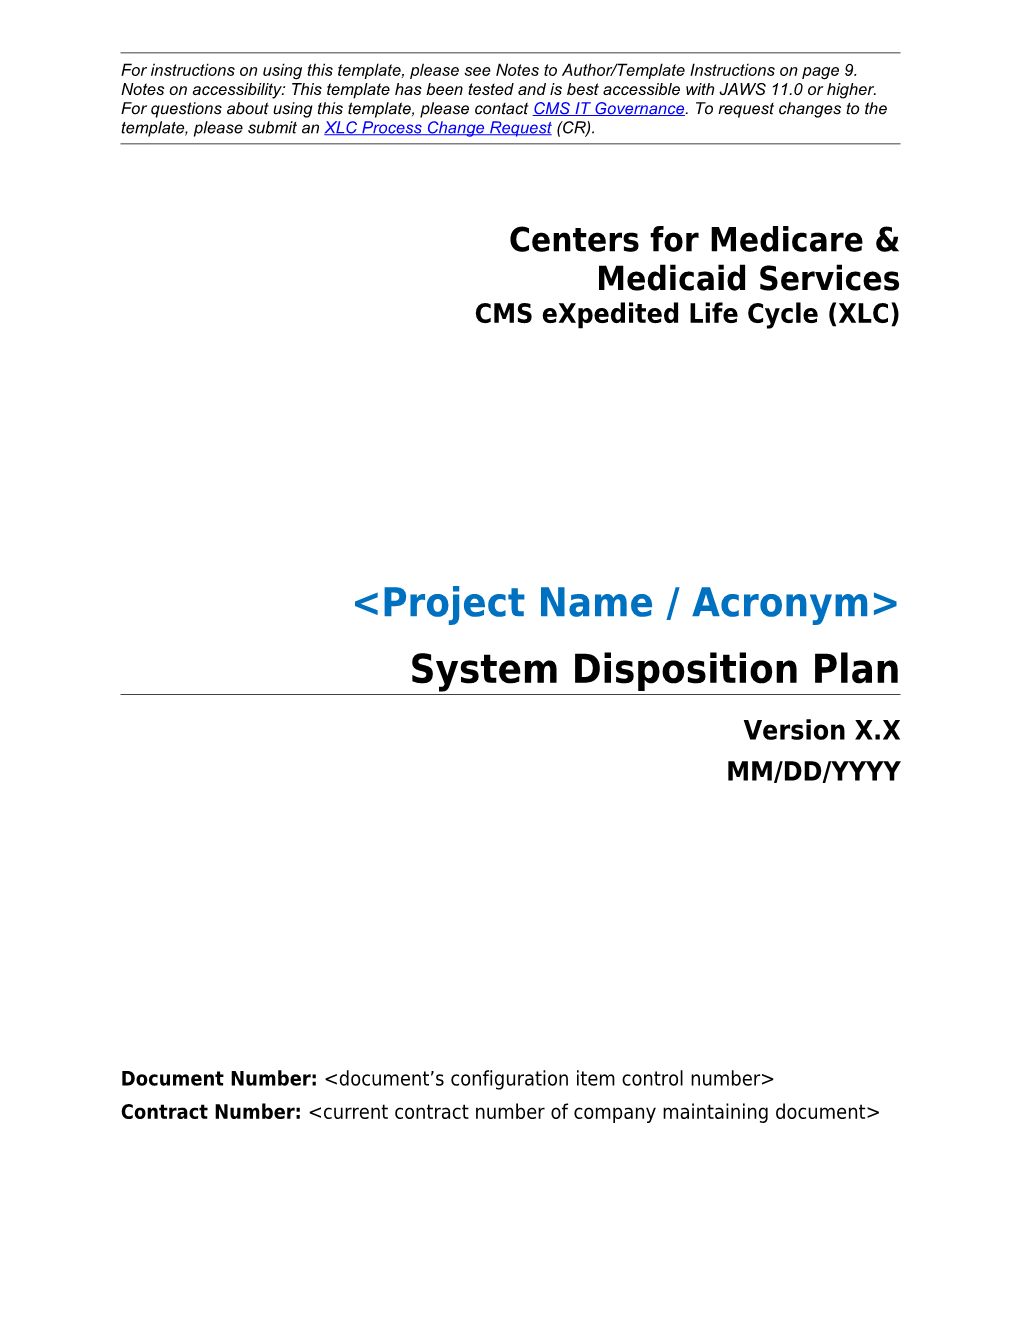 System Disposition Plan